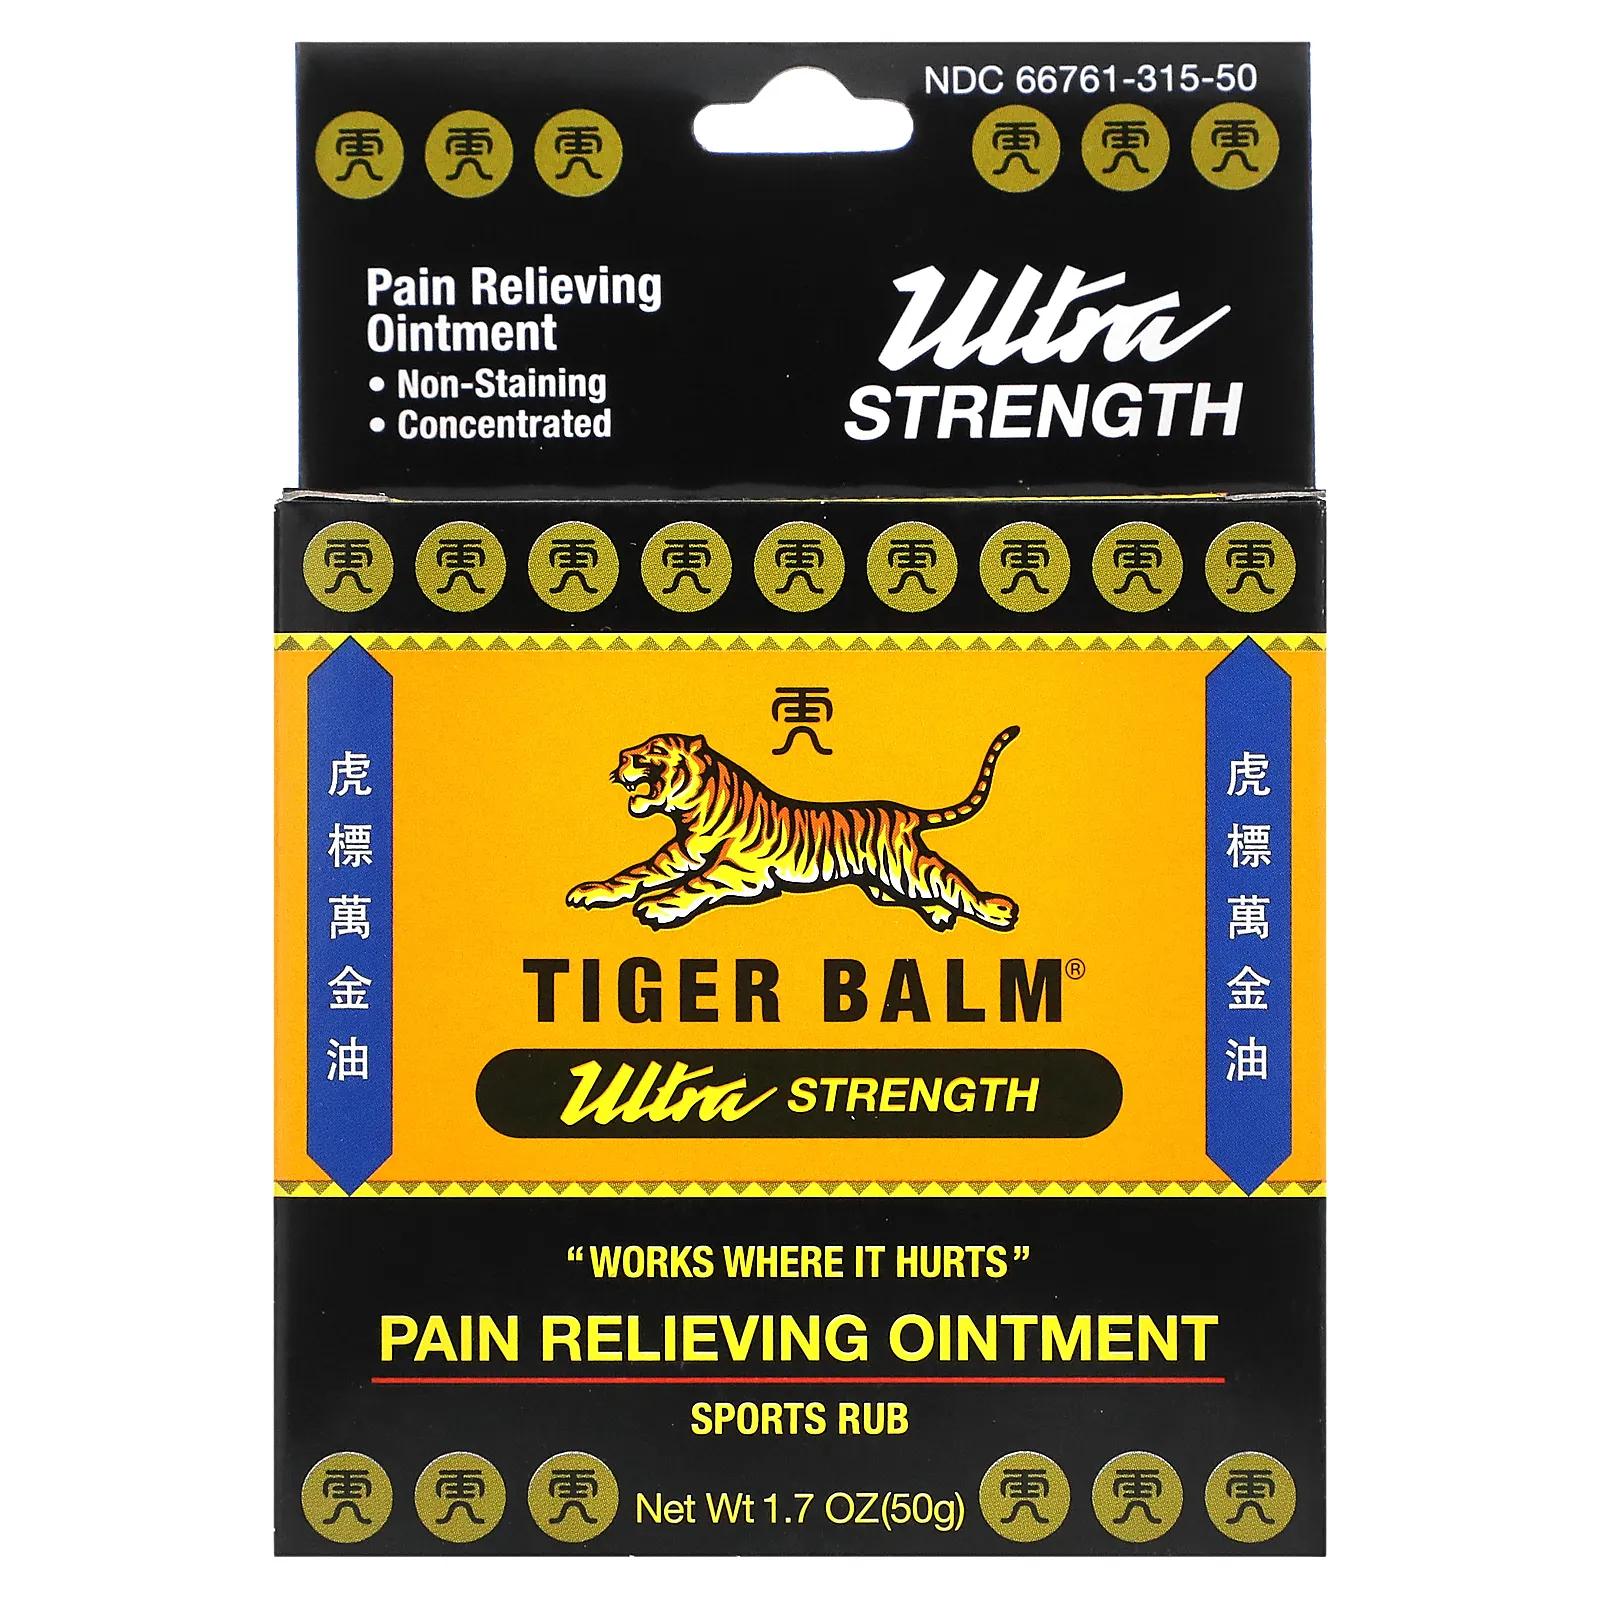 Tiger Balm Мазь для снятия боли ультра-сила 1,7 унции (50 г) vietnam white tiger balm for headache toothache stomachache vaume blanc